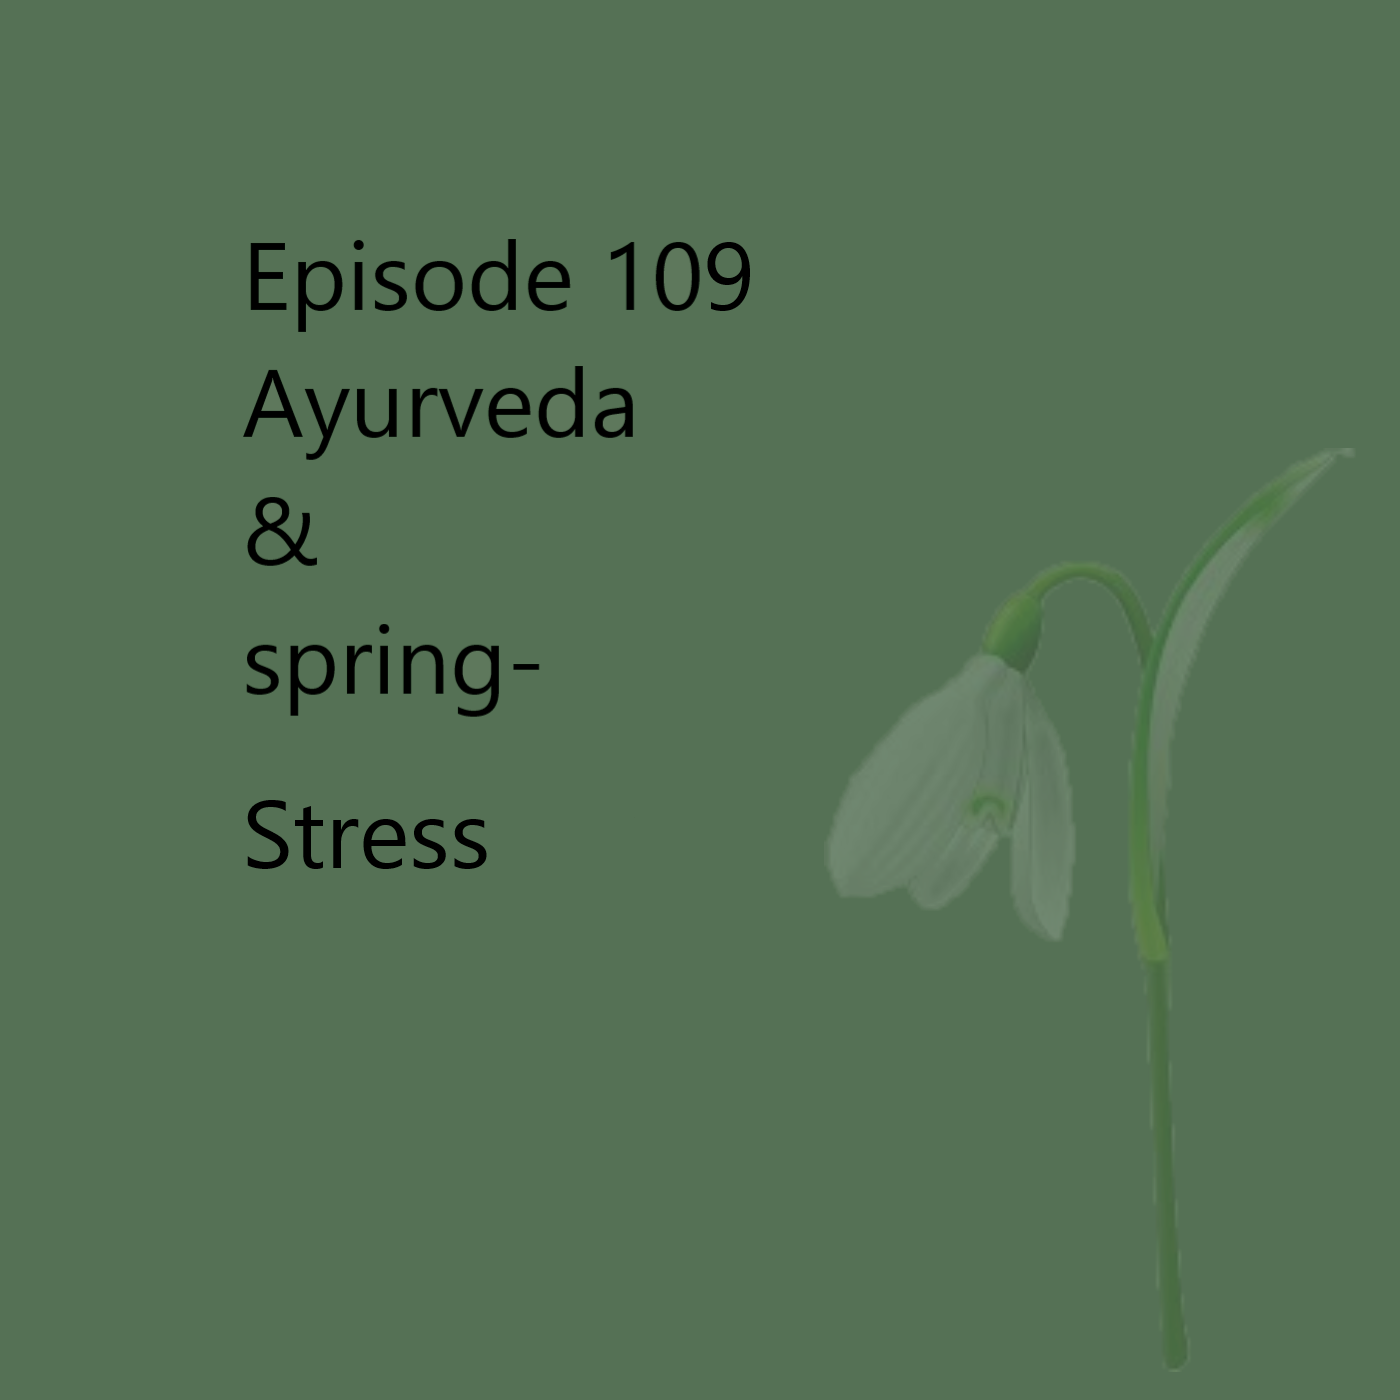 Episode 109 Ayurvedic life - From Winter to Spring #4